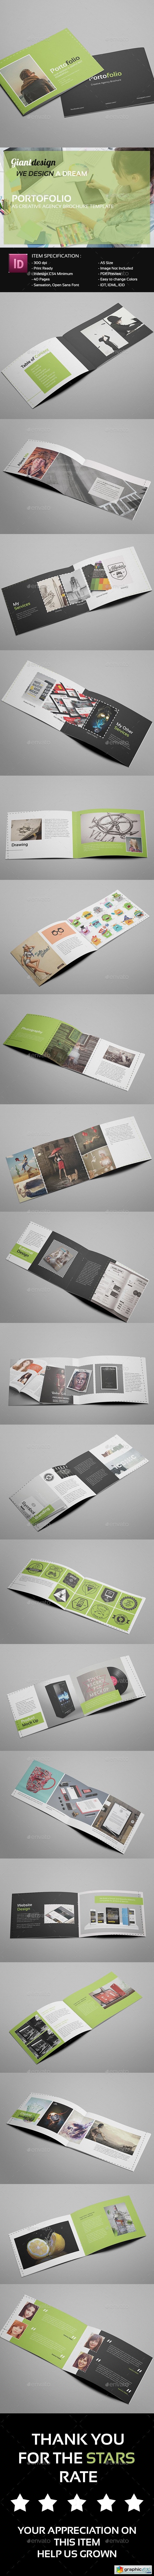 Portofolio - Creative Agency Brochure